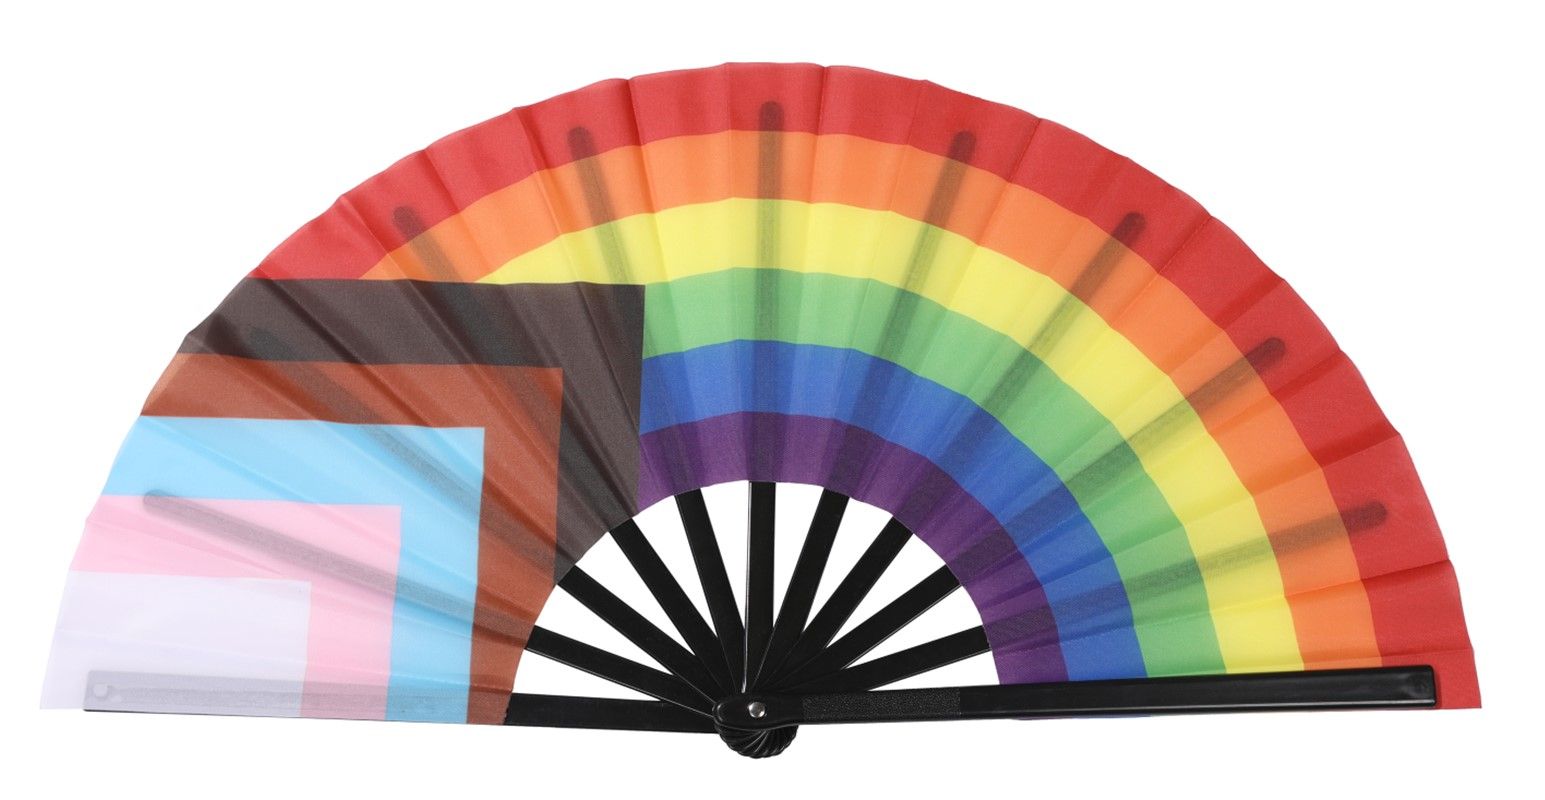 GAY PRIDE TOTE BAG LGBT RAINBOW LESBIAN FESTIVAL HEART STRAIGHT BI SEXUAL